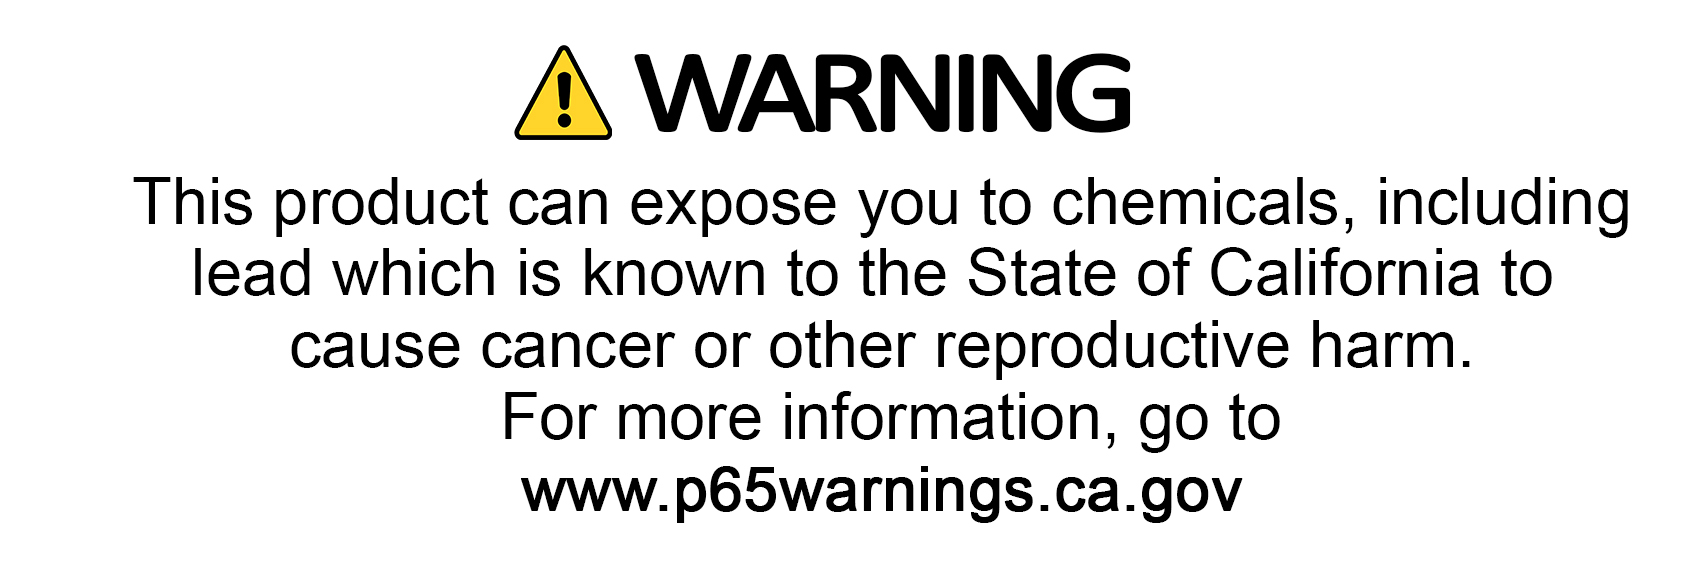 prop-65-warning-for-website.jpg